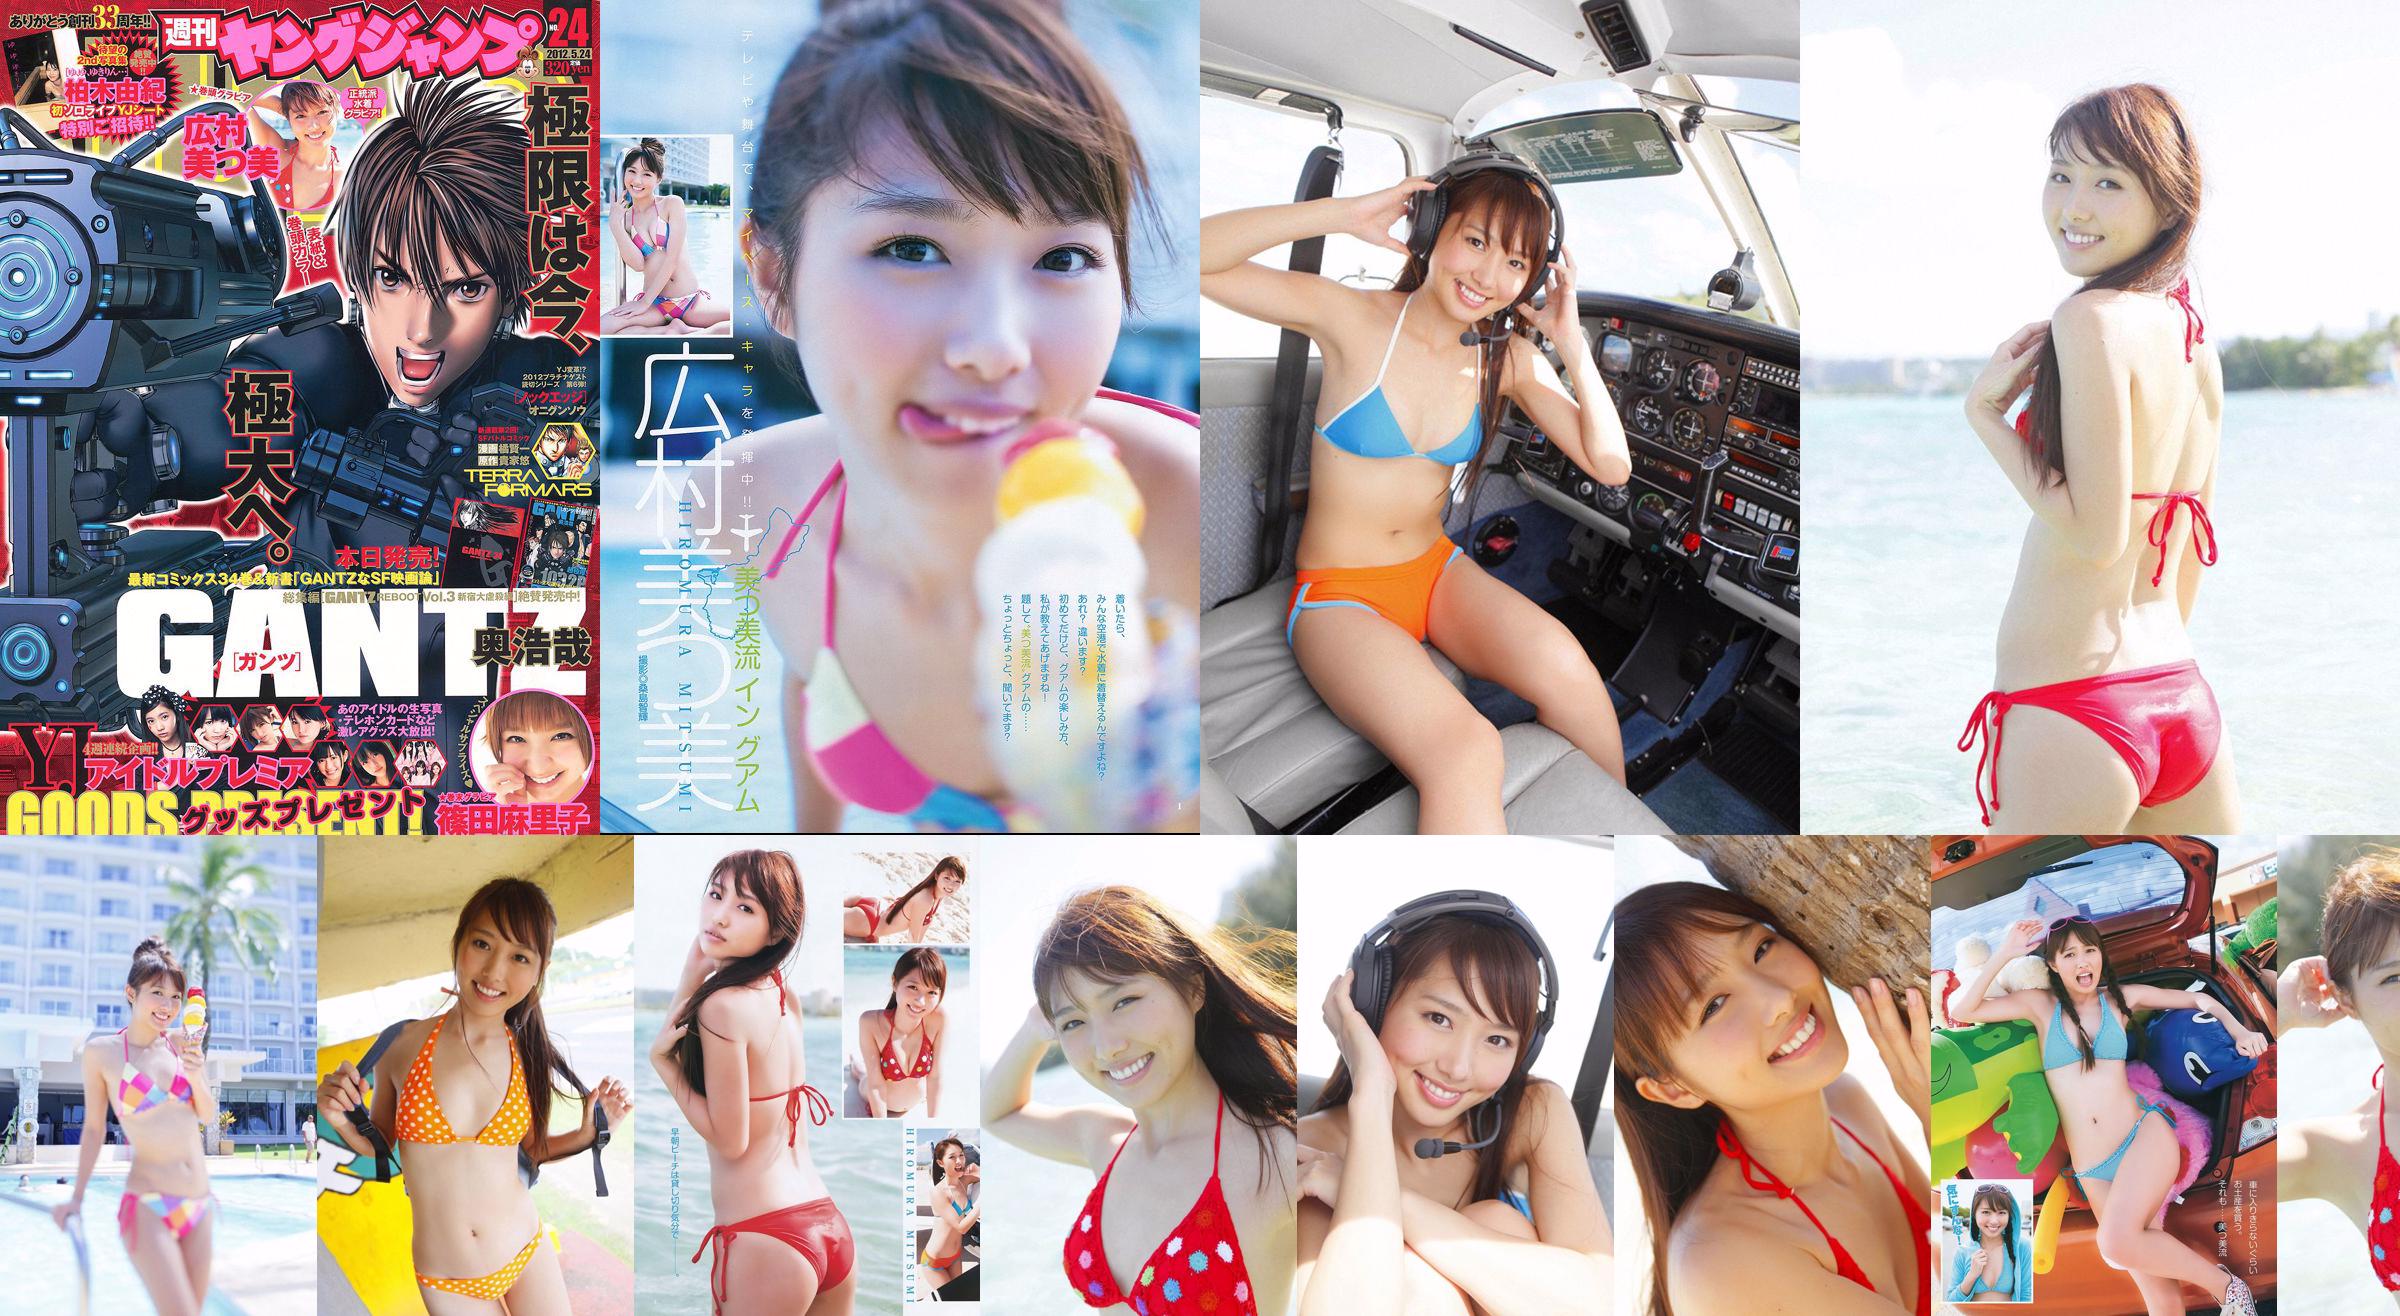 Mitsumi Hiromura Mariko Shinoda [Lompat Muda Mingguan] 2012 Majalah Foto No.24 No.891c52 Halaman 1